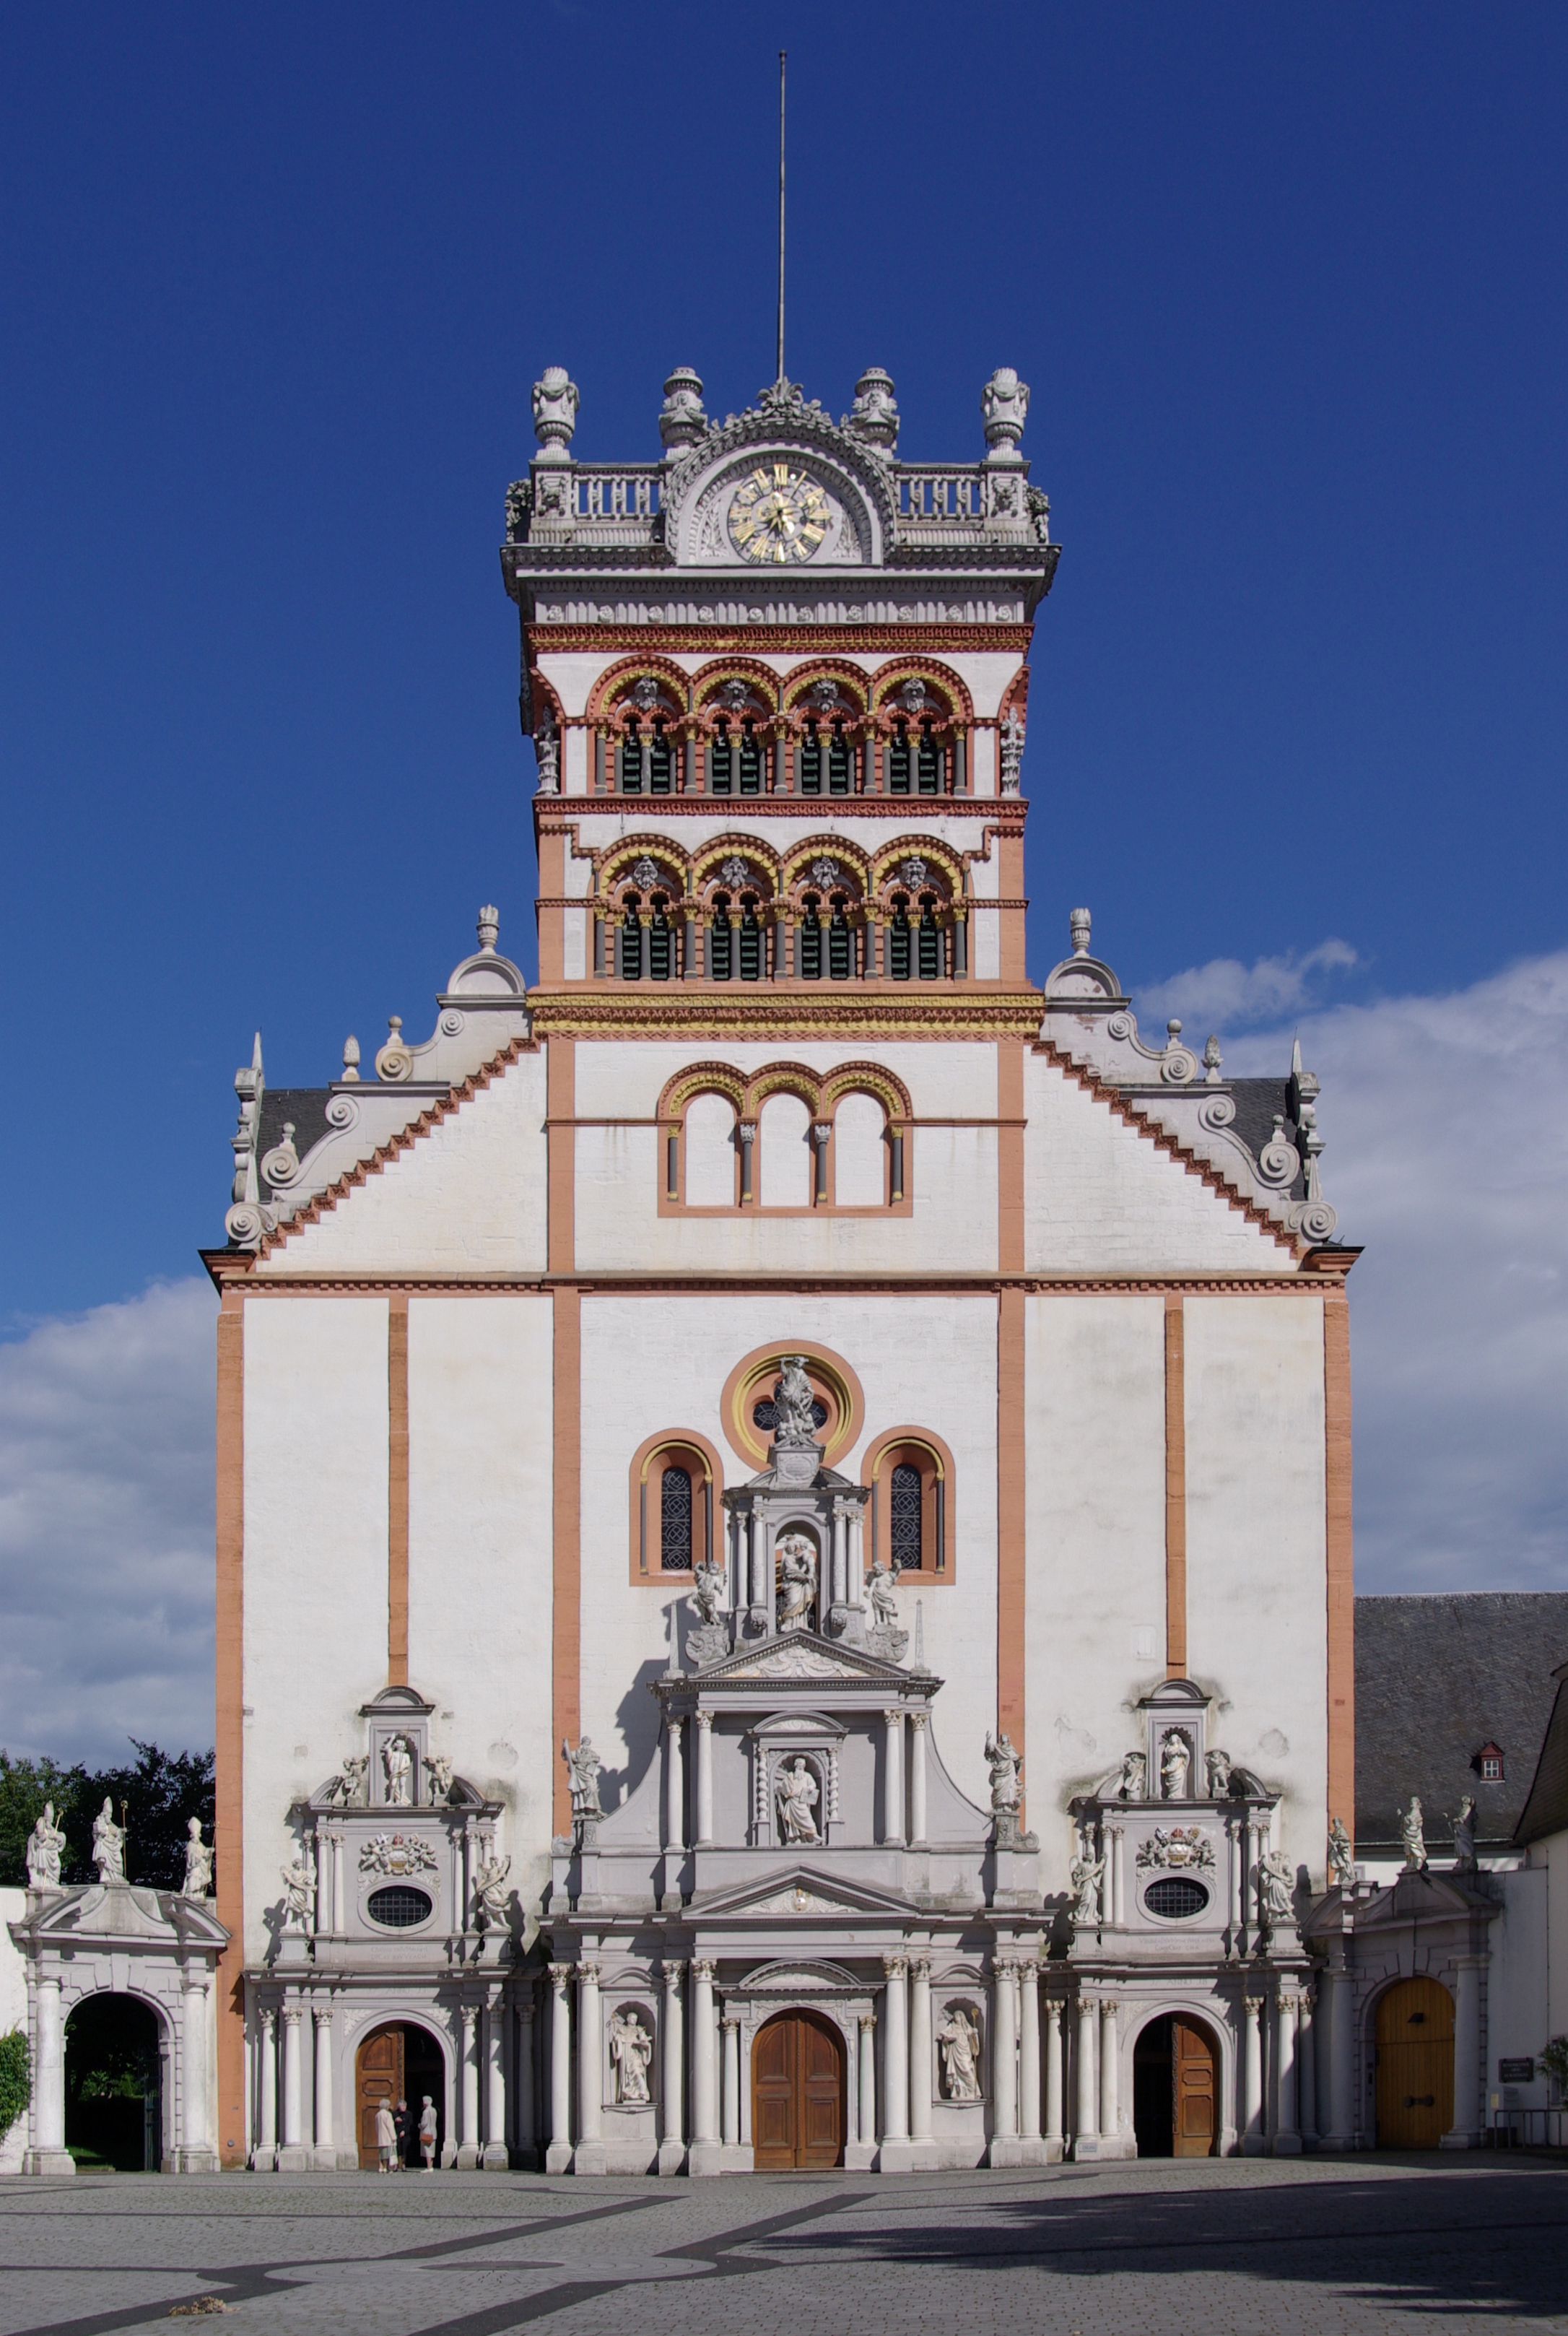 Saint Matthias church in Trier, Germany via Wikimedia Commons